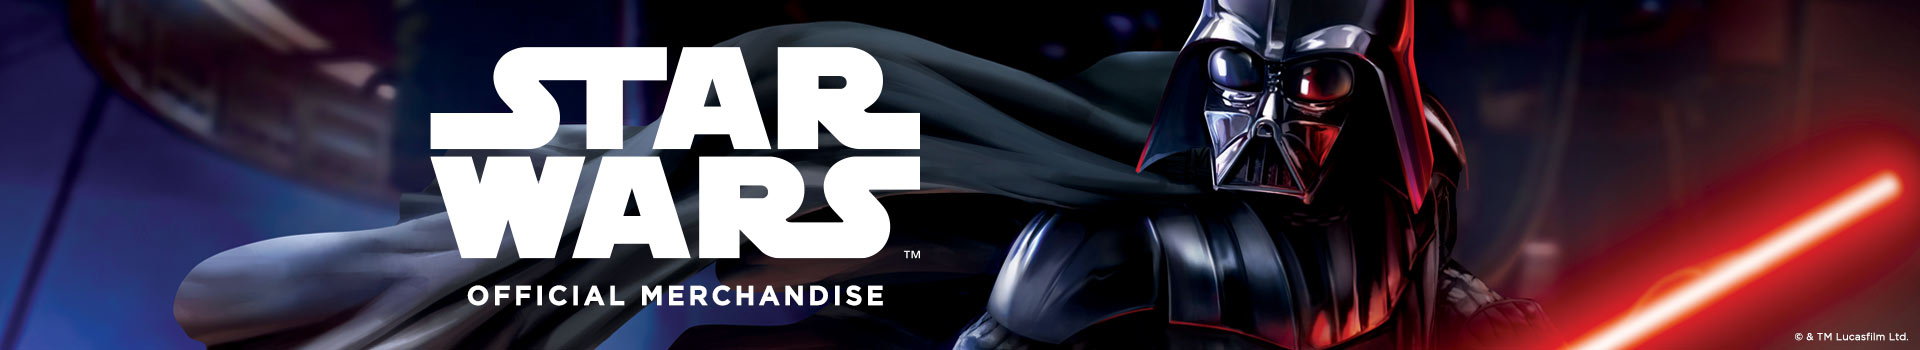 Star Wars - Official Merchandise